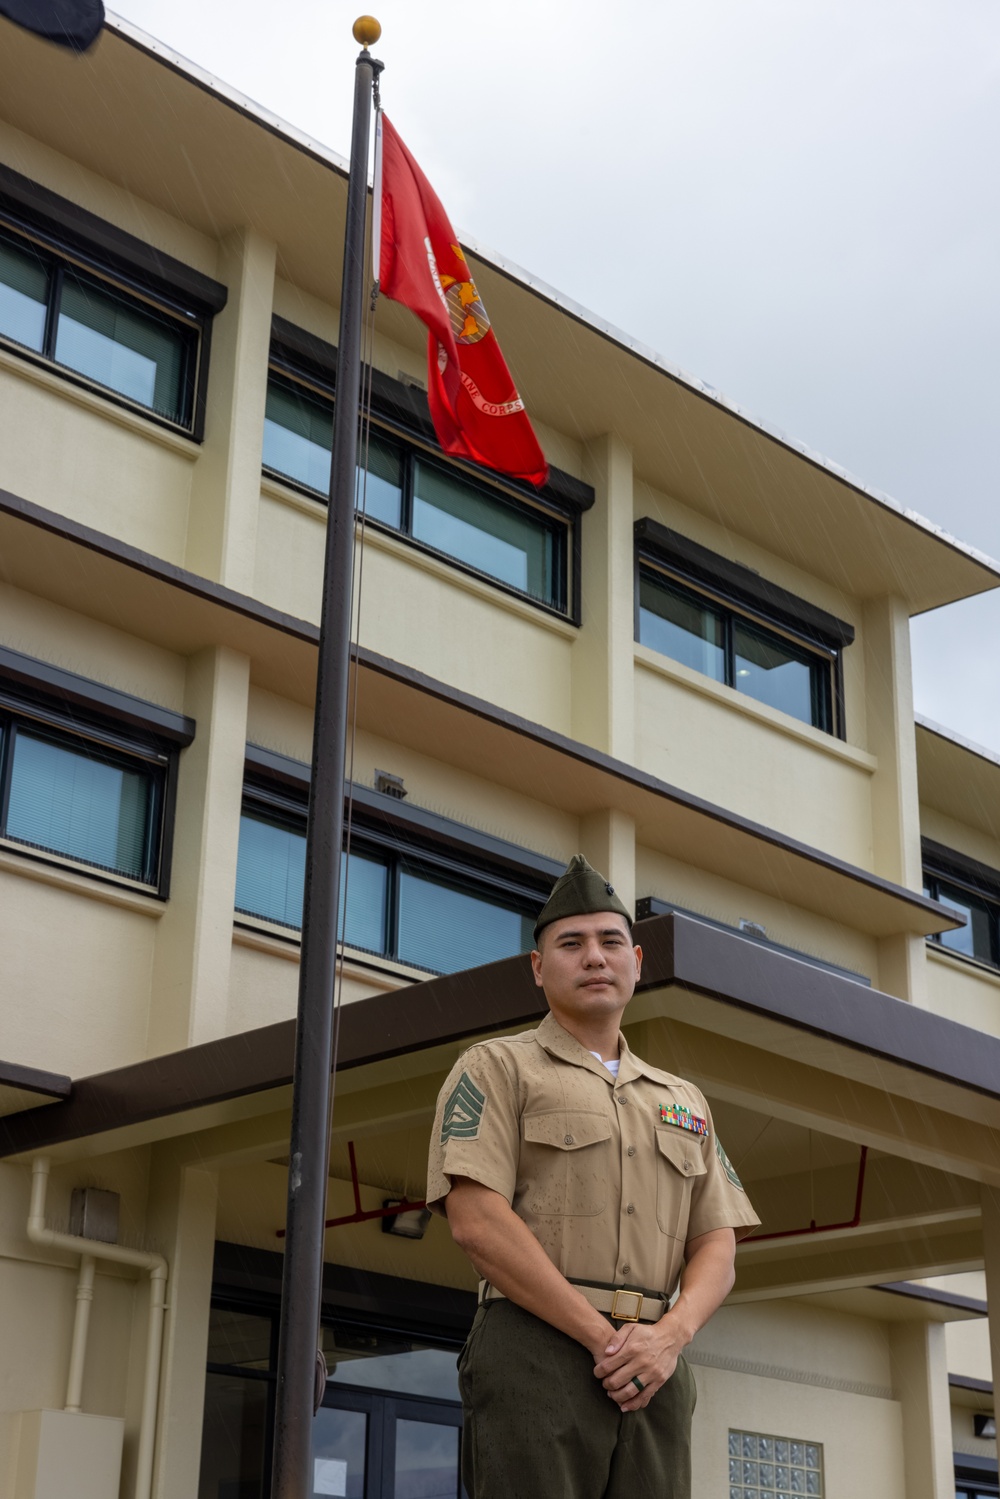 Camp Blaz recognizes Asian American Pacific Islander personnel